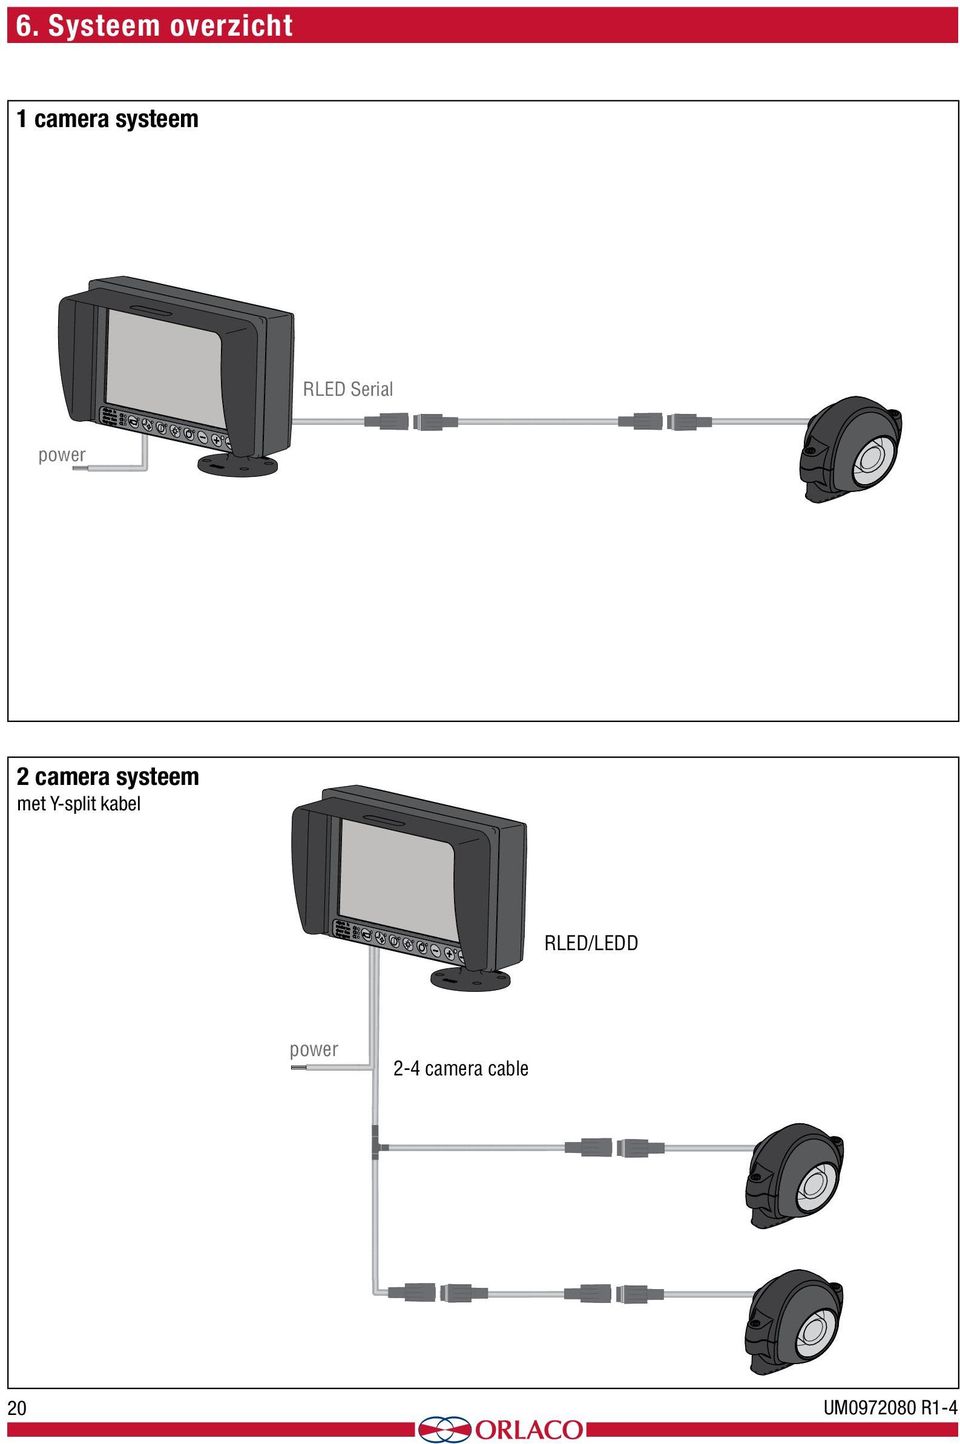 systeem met Y-split kabel RLED/LEDD